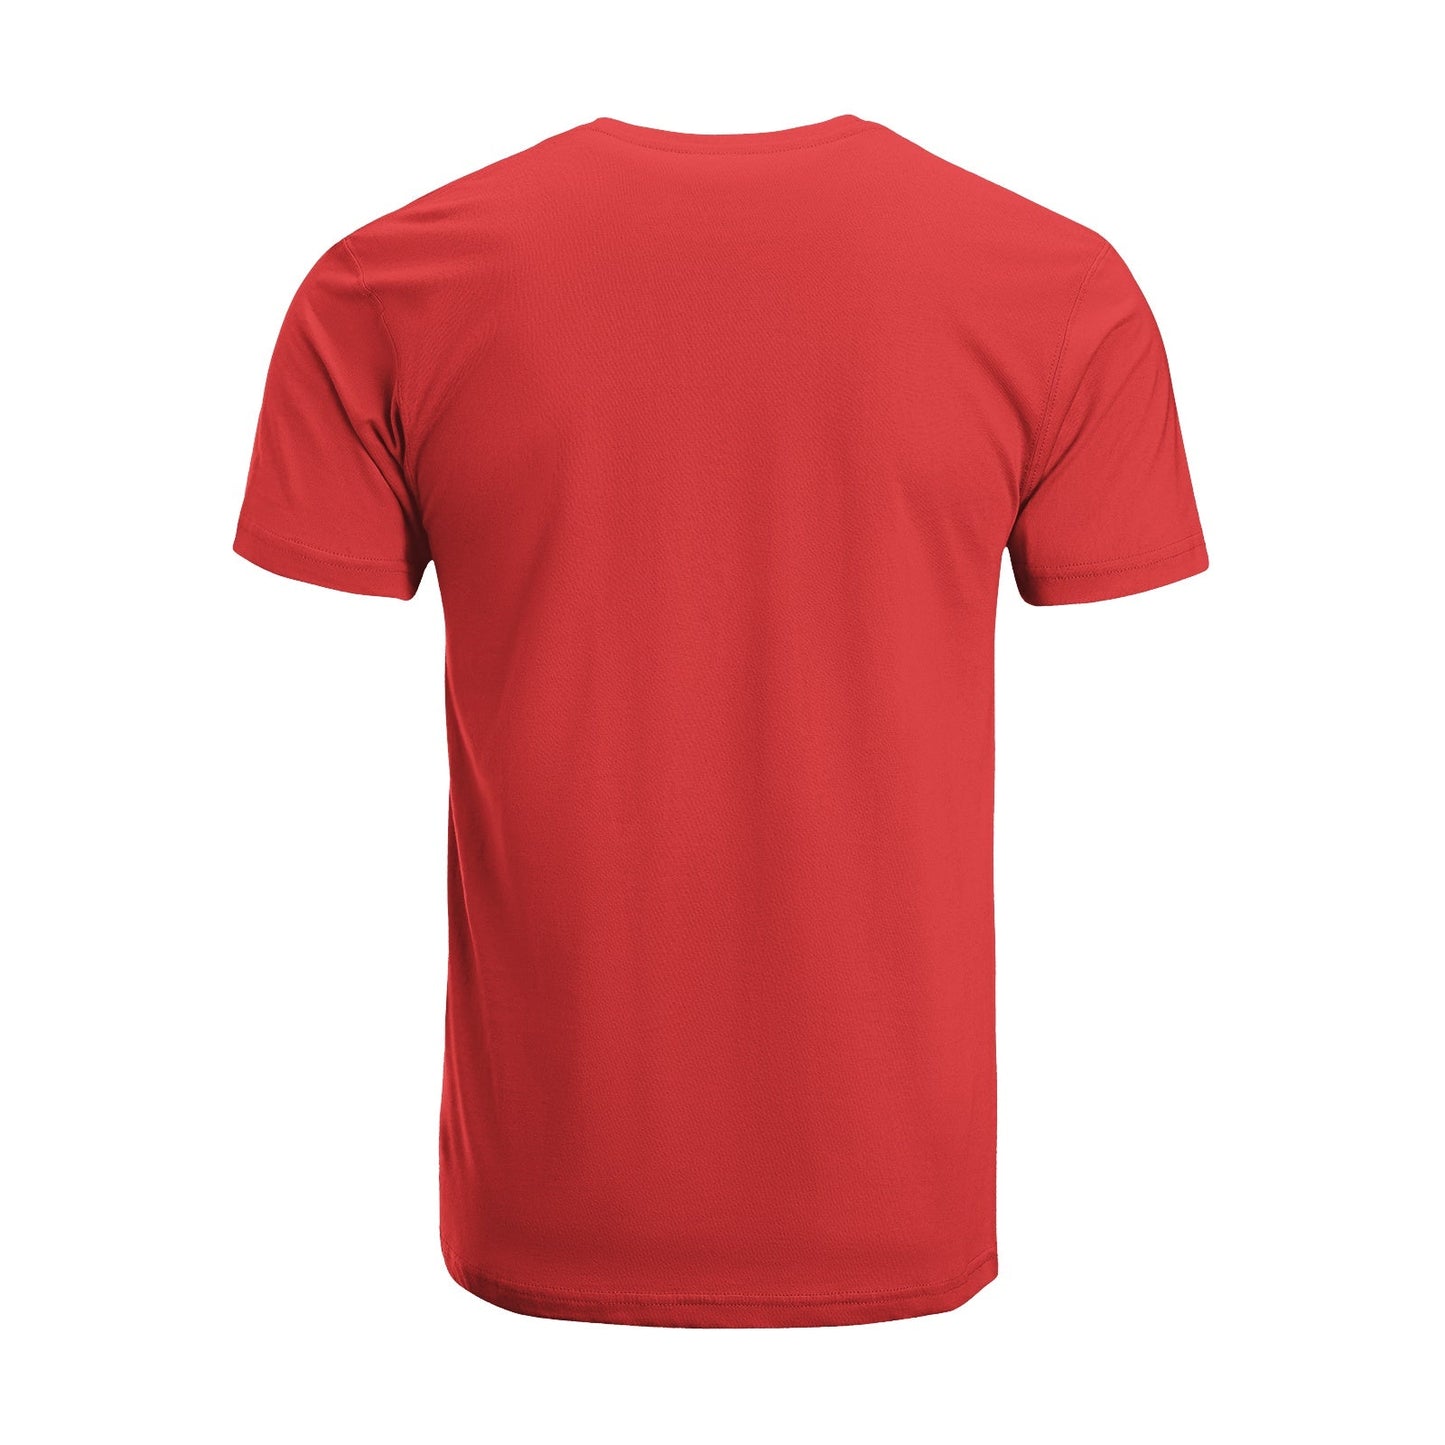 Unisex Short Sleeve Crew Neck Cotton Jersey T-Shirt MOM 32